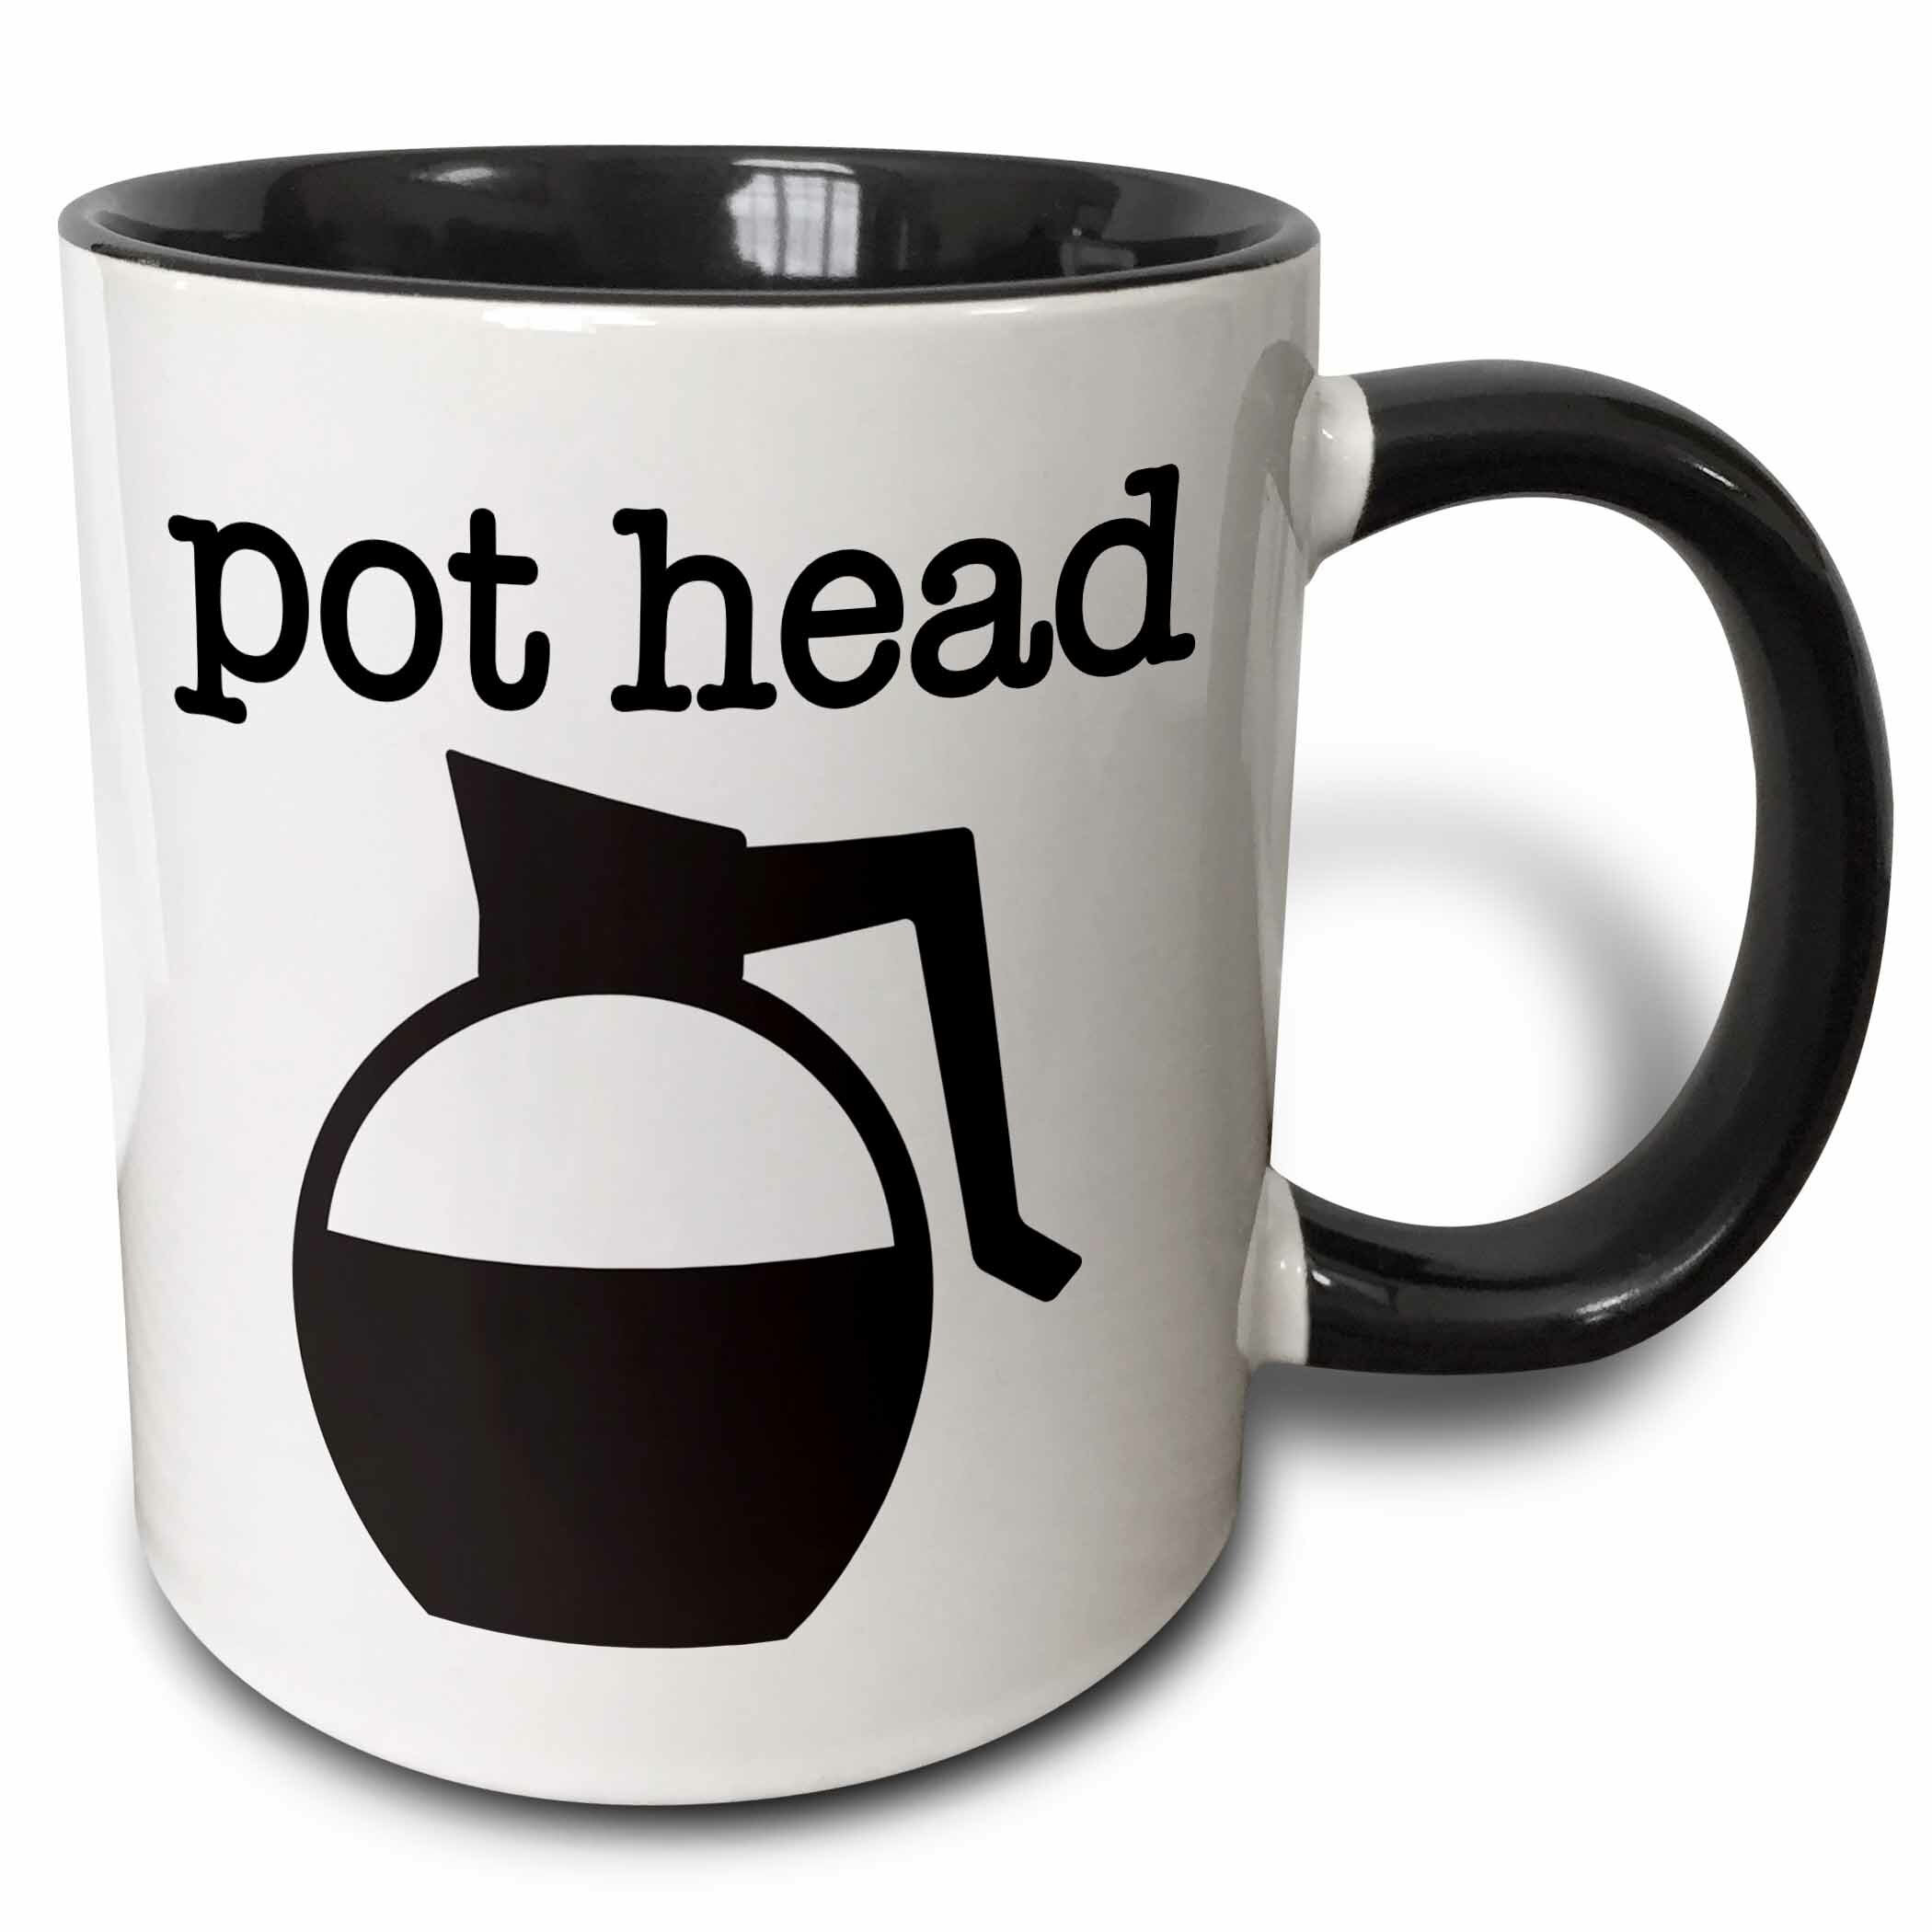 Coffee Pot Head! Mug